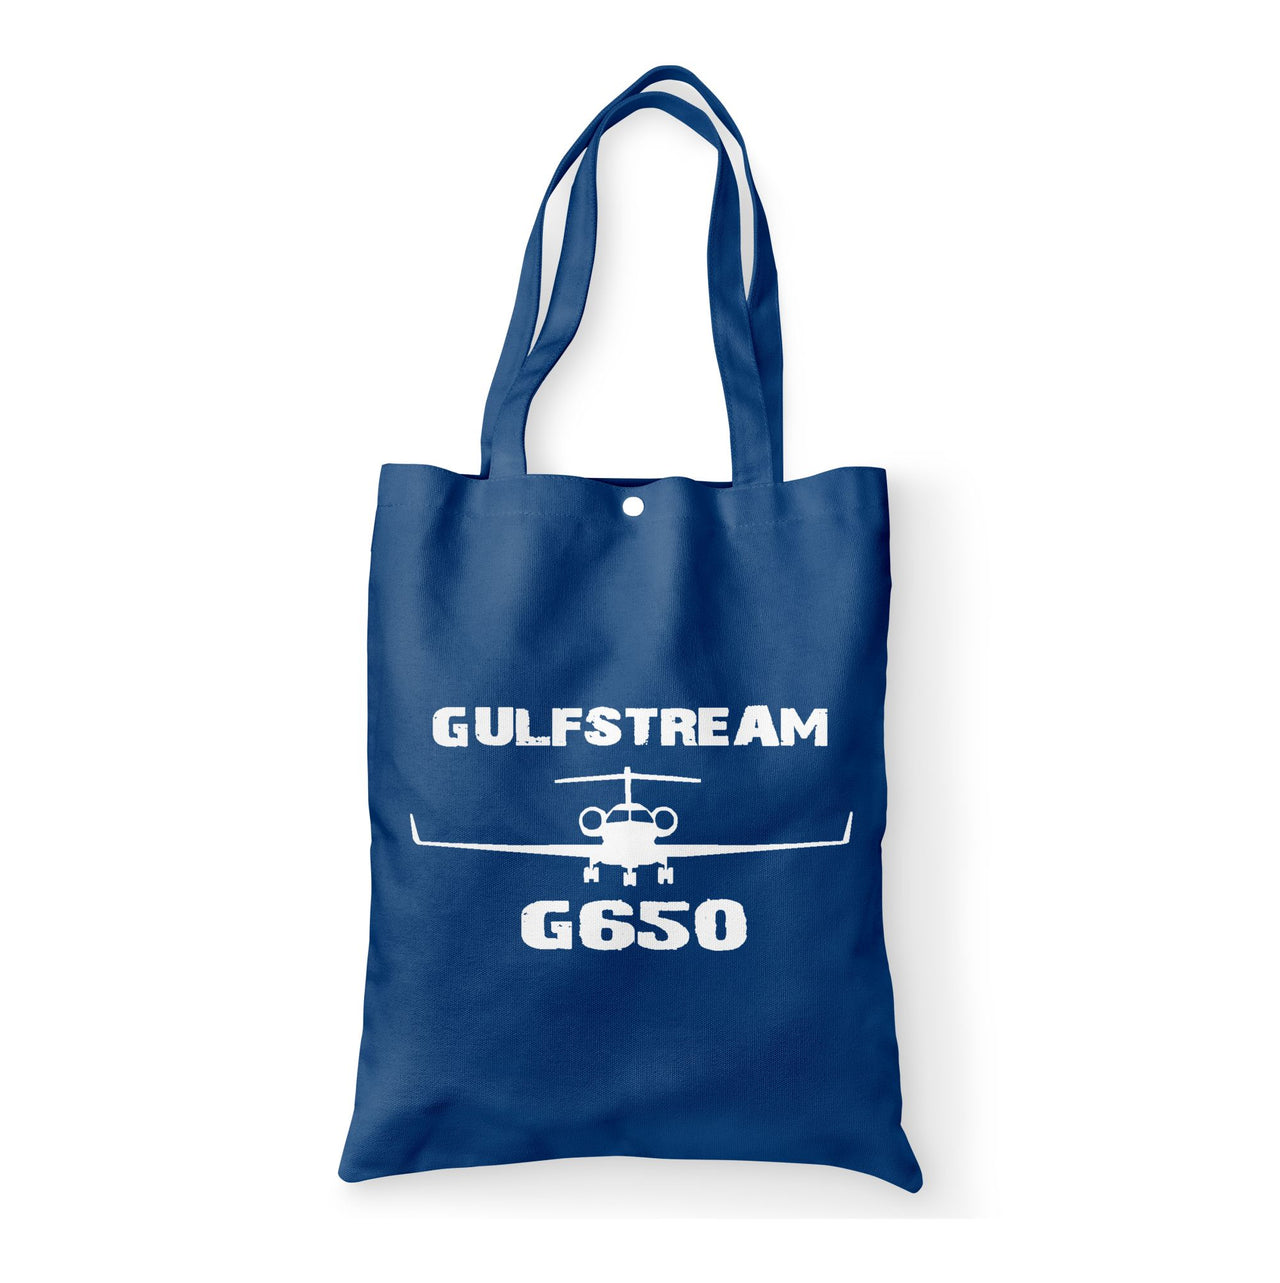 Gulfstream G650 & Plane Designed Tote Bags